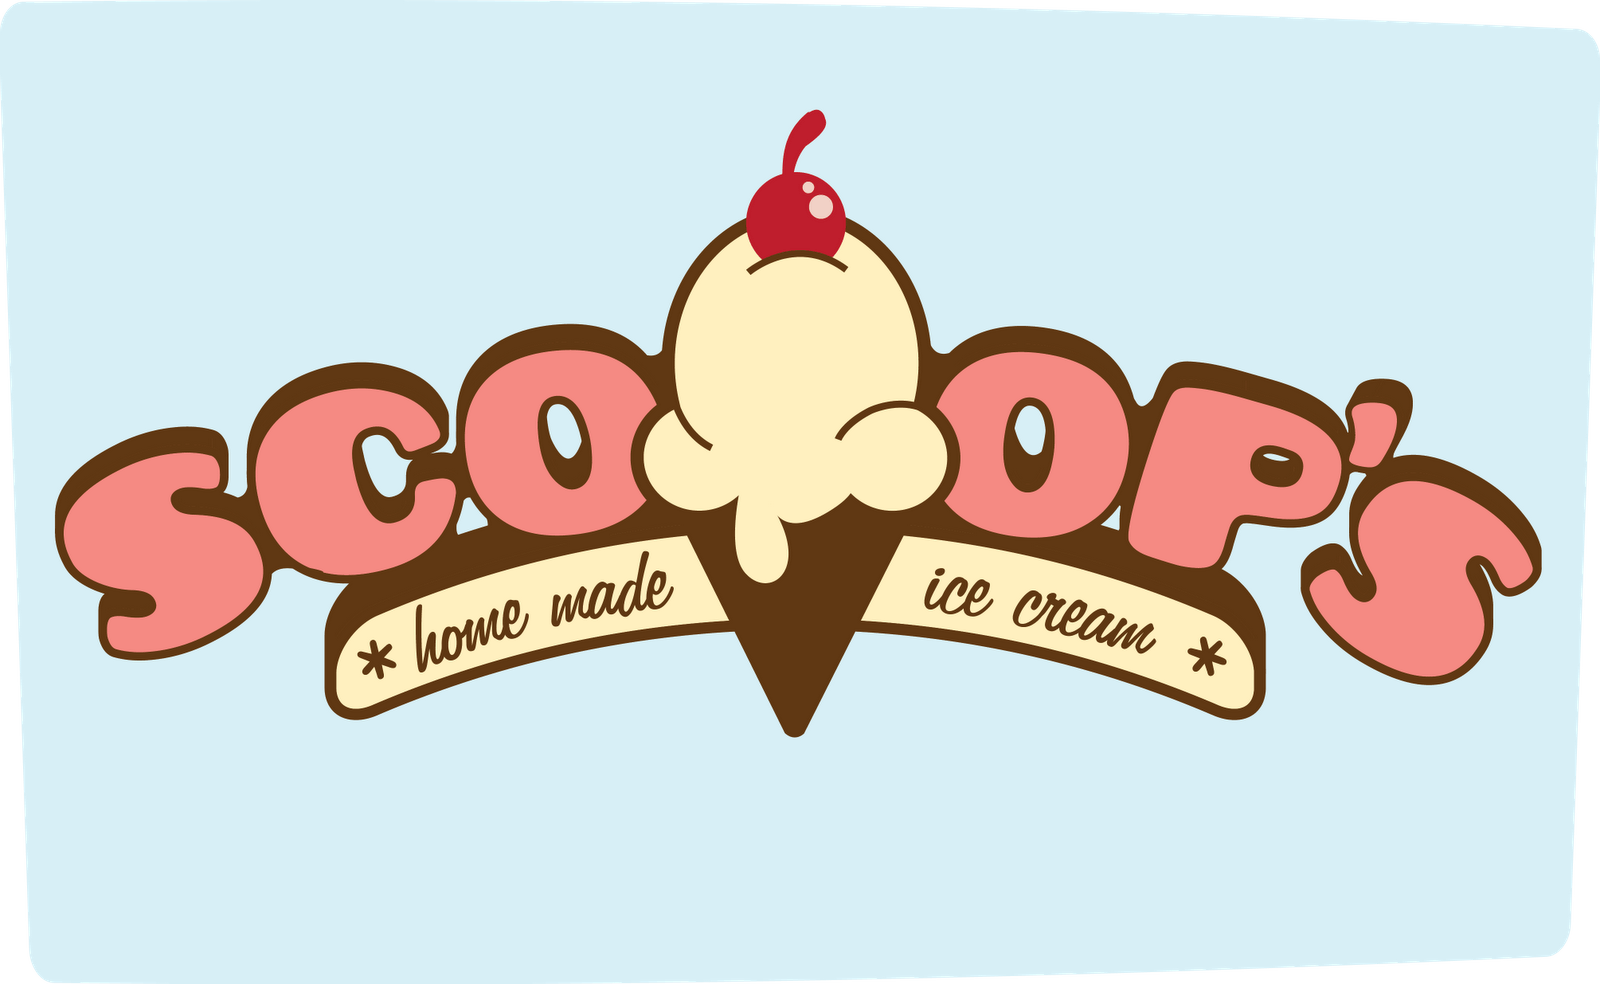 Scoops Ice Cream Logo - Brett Ferrin BFA Visual Communications Portfolio: Scoop's Home Made